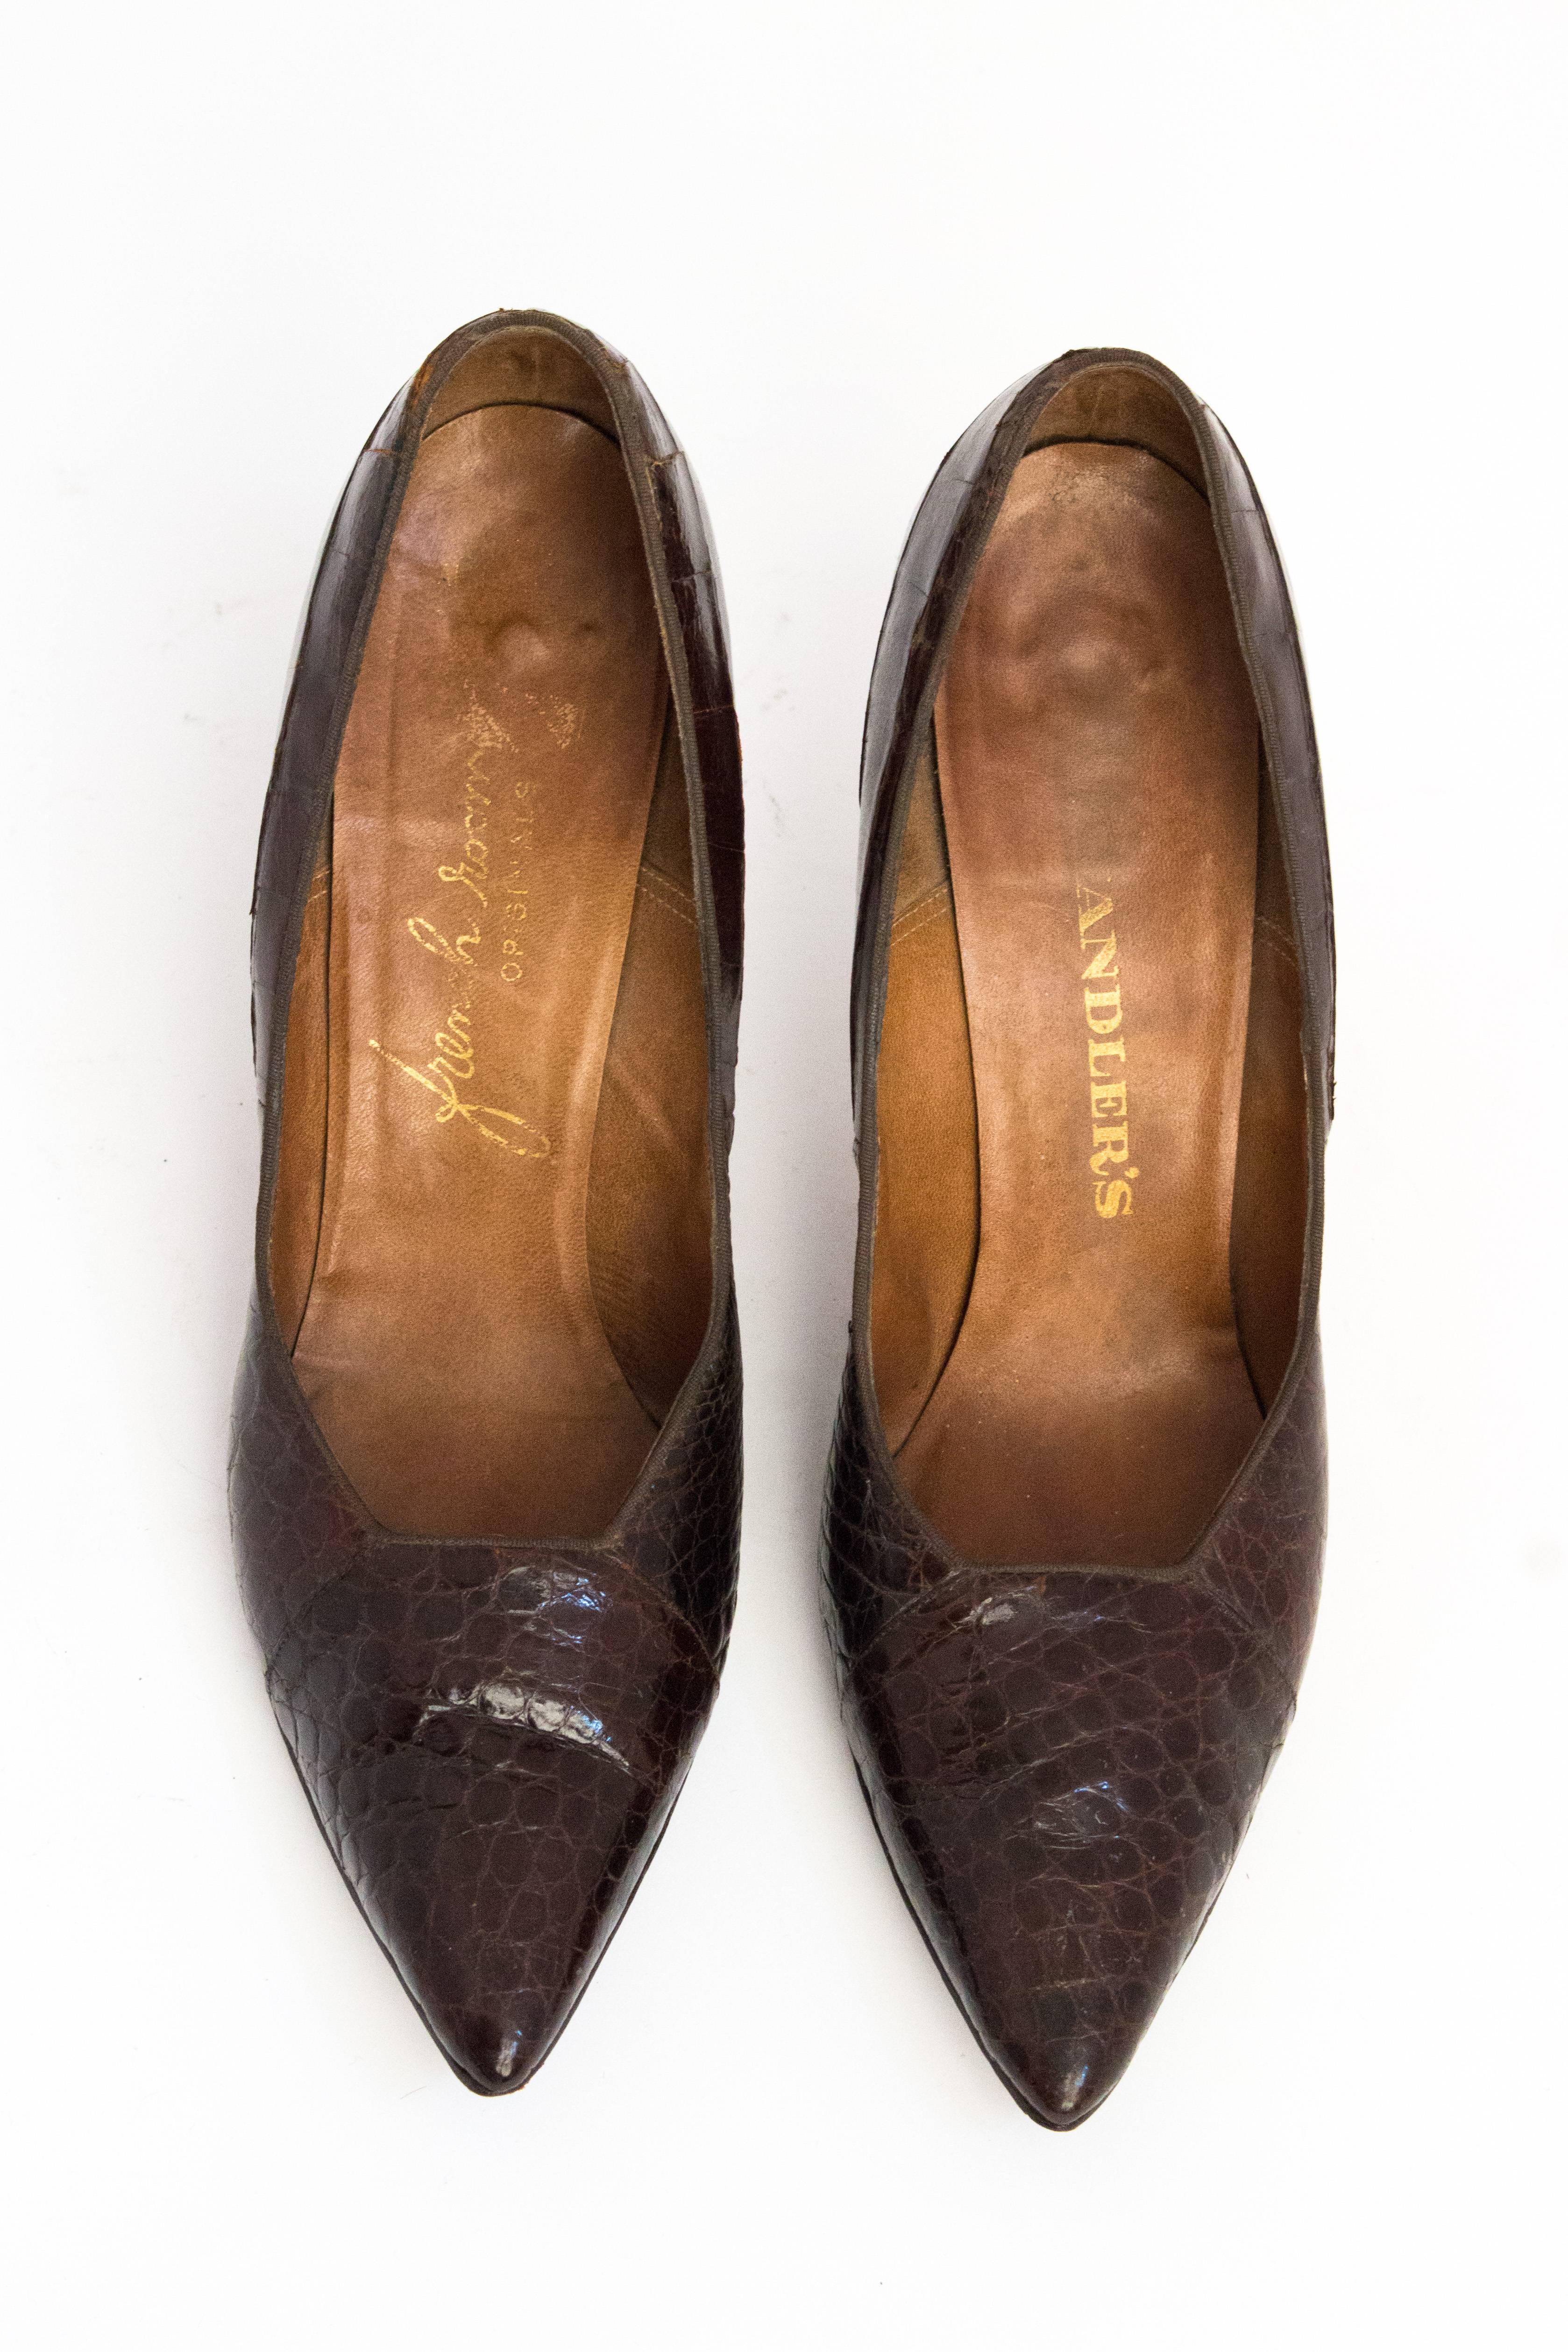 60s chocolate brown alligator pointed toe stilettos. Pieced toe box construction. Leather soles. Original heel caps. 

Measurements:
Insole: 10 1/4